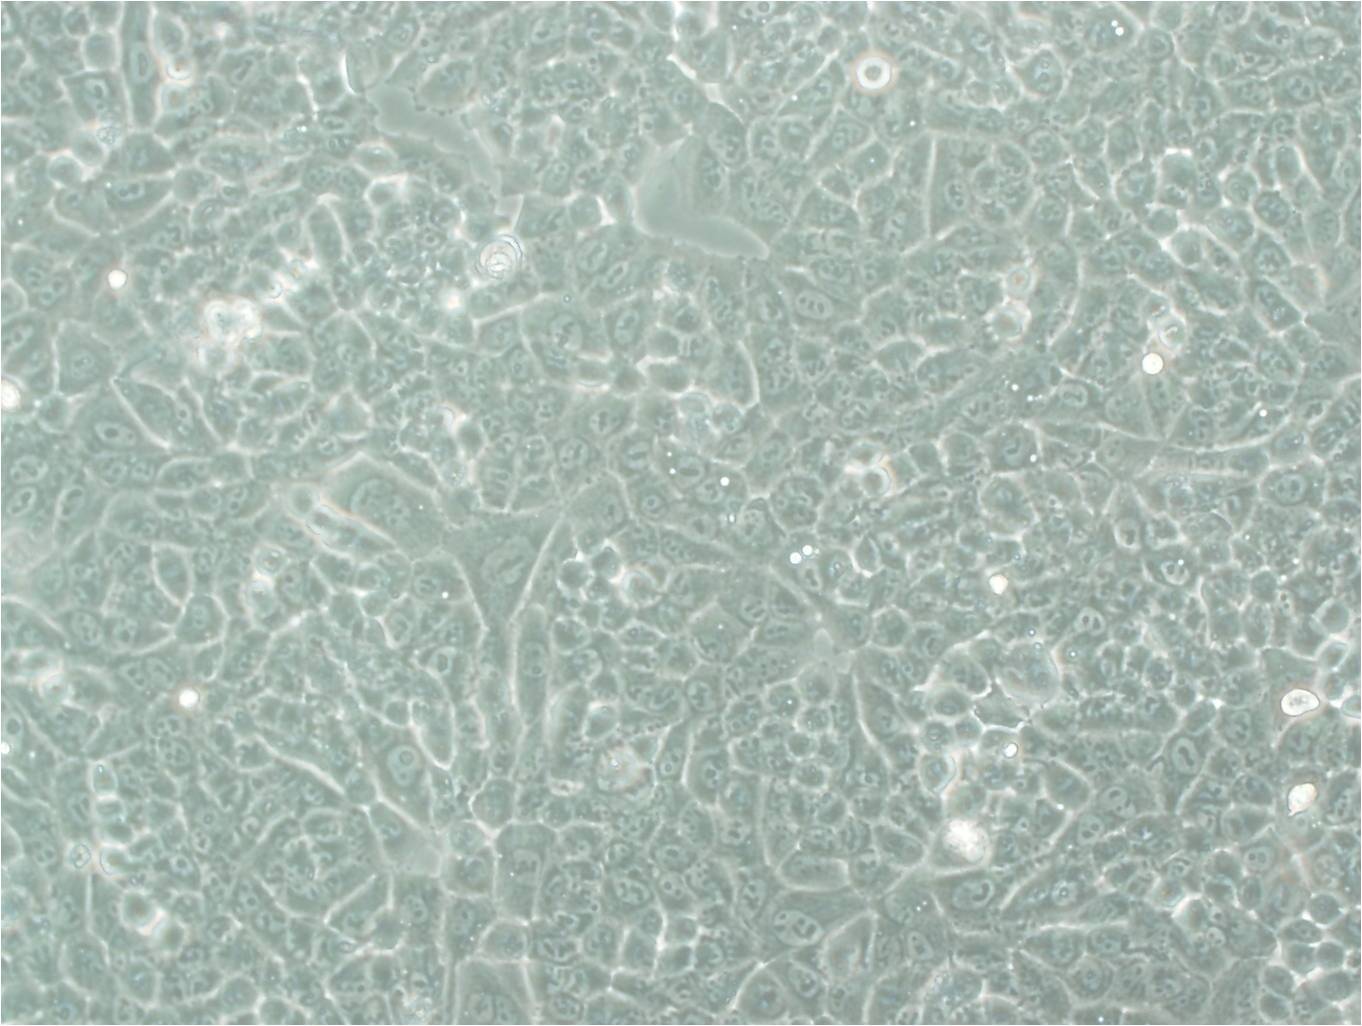 NCI-H187 Fresh Cells|人视网膜母细胞瘤细胞(送STR基因图谱)